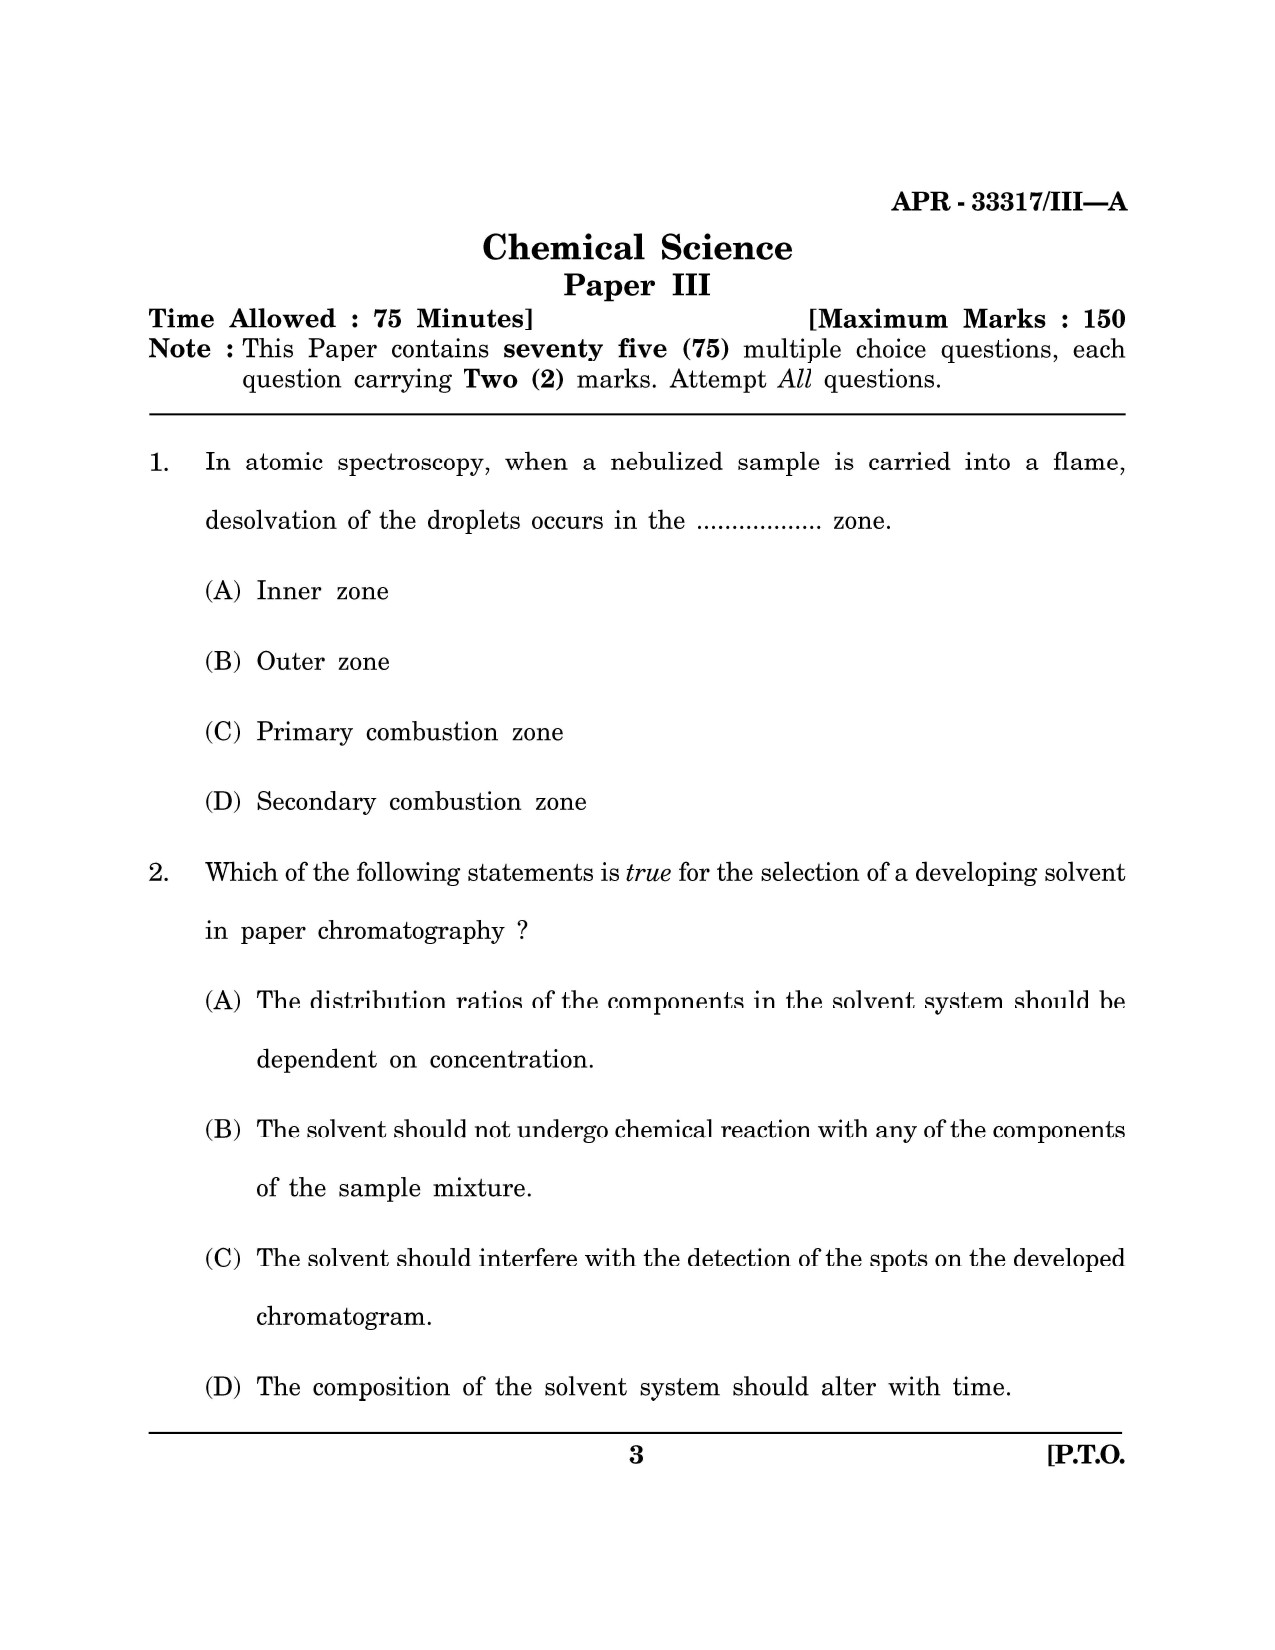 Maharashtra SET Chemical Sciences Question Paper III April 2017 2